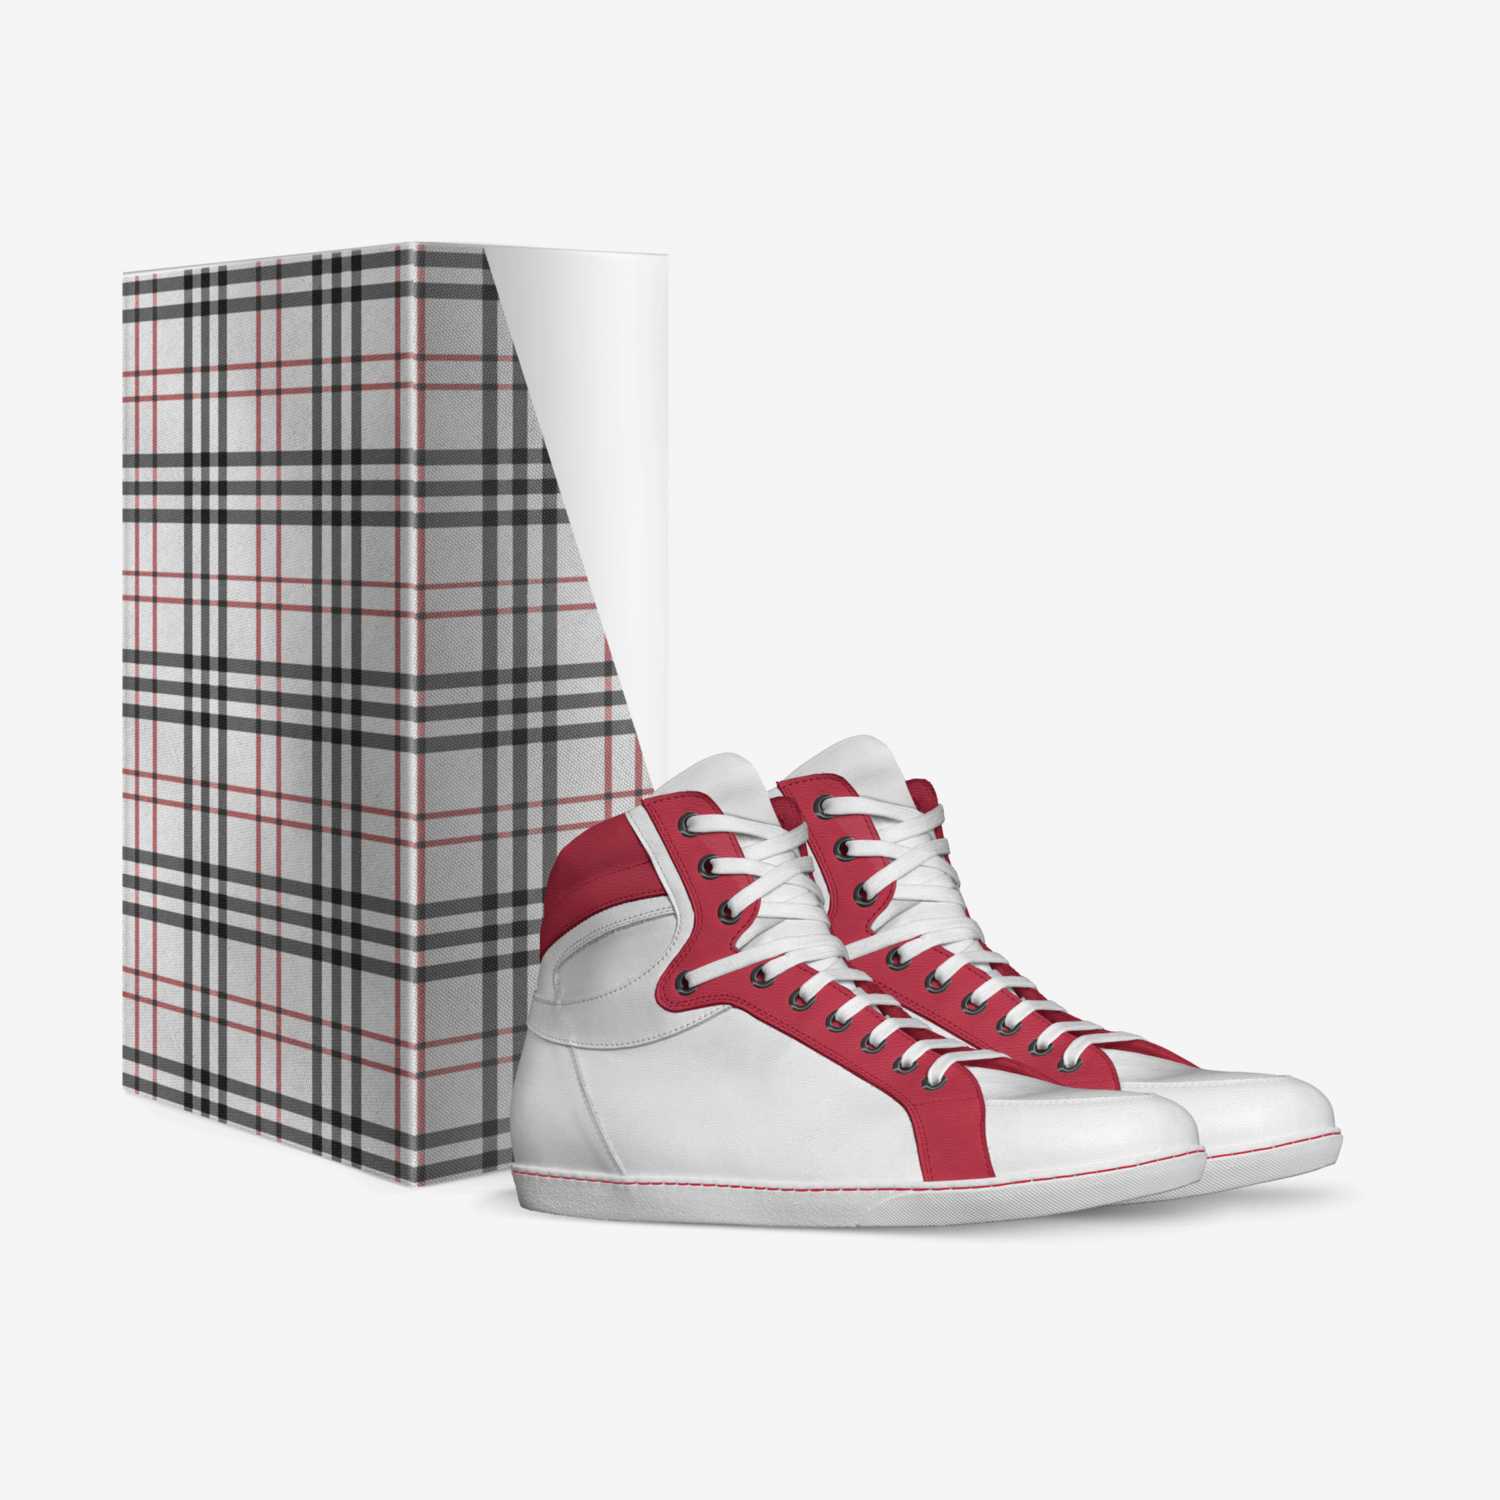 New Road ® Winter custom made in Italy shoes by Paulina Jastrzebska | Box view